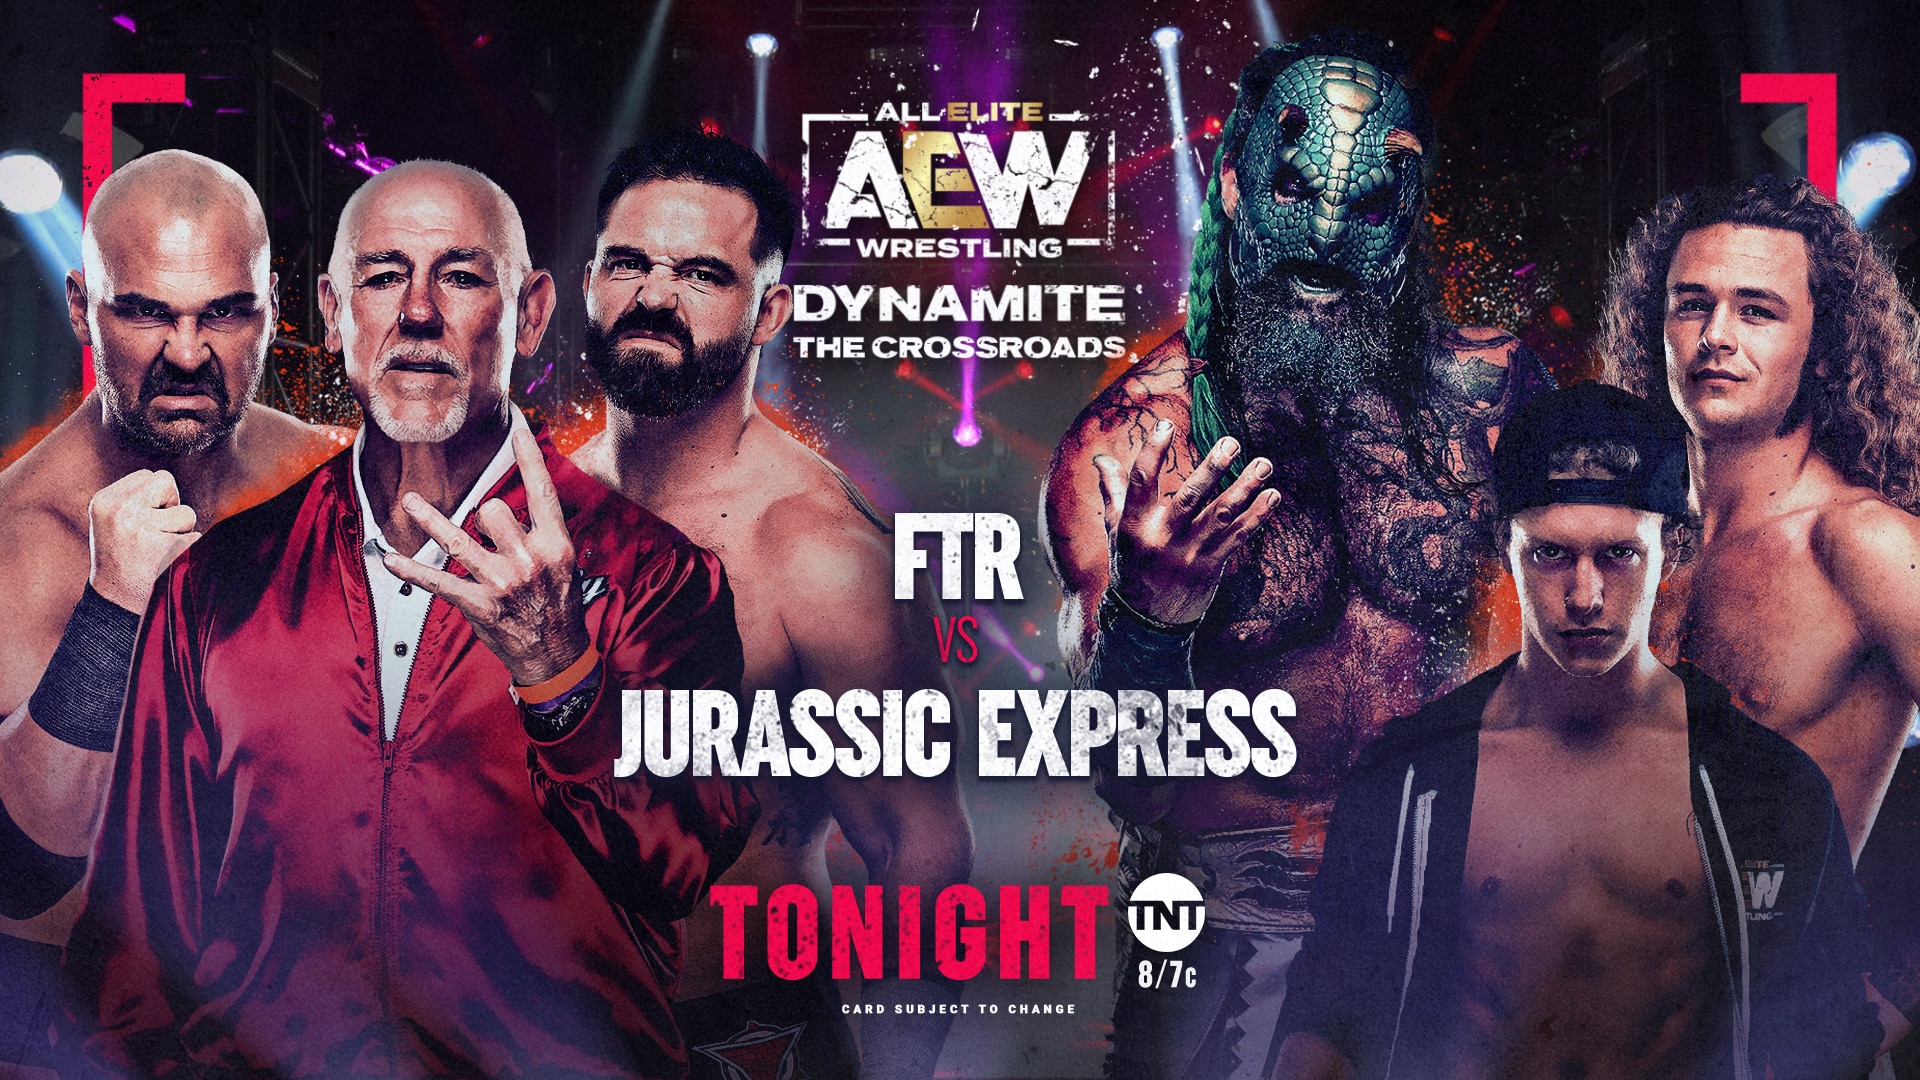 FTR vs Jurassic Express